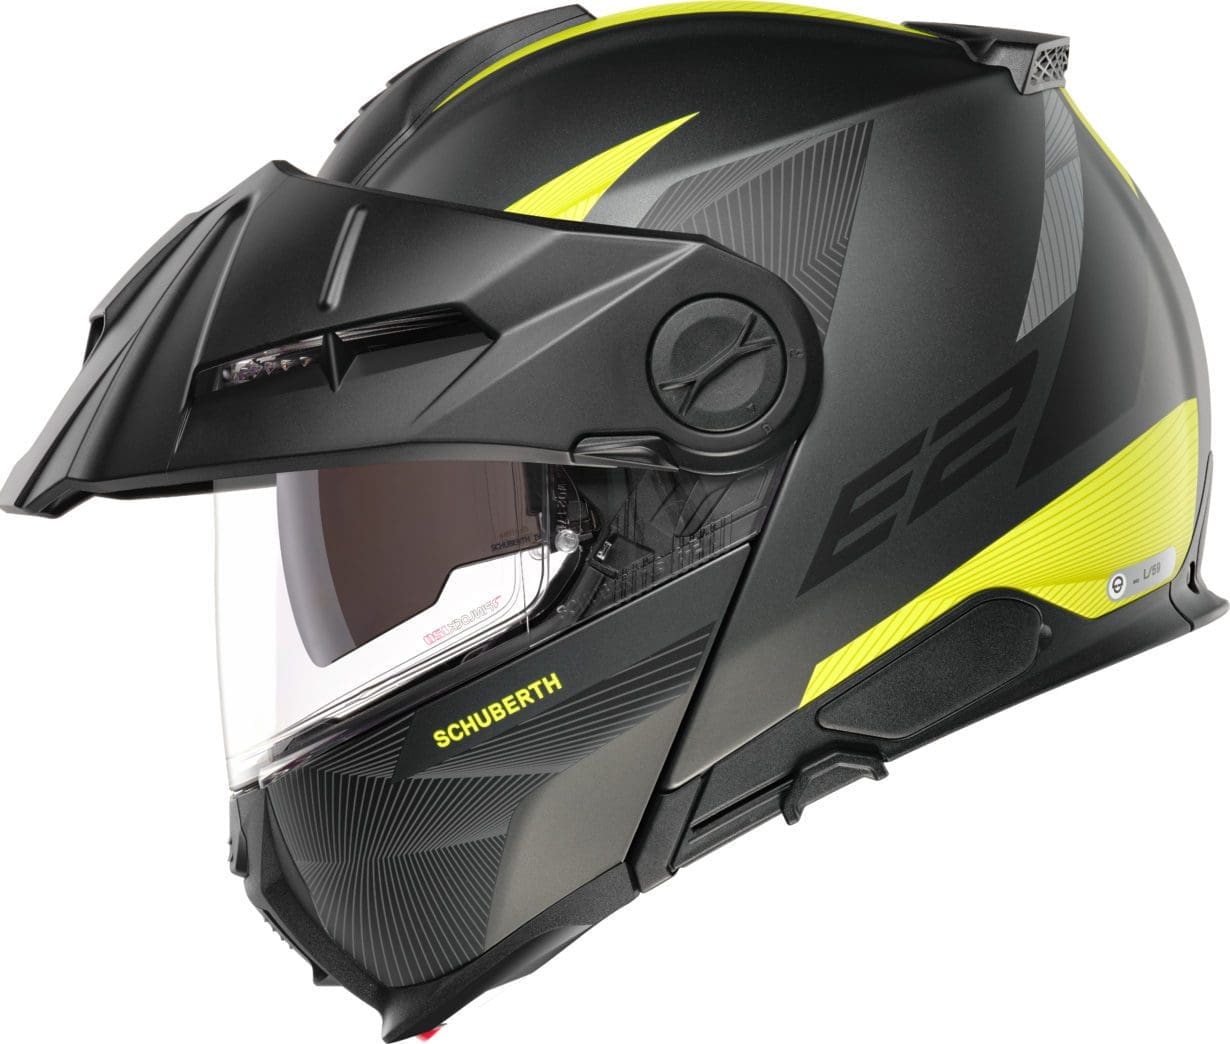 NEW GEAR: Schuberth’s E2 flip-front adventure helmet